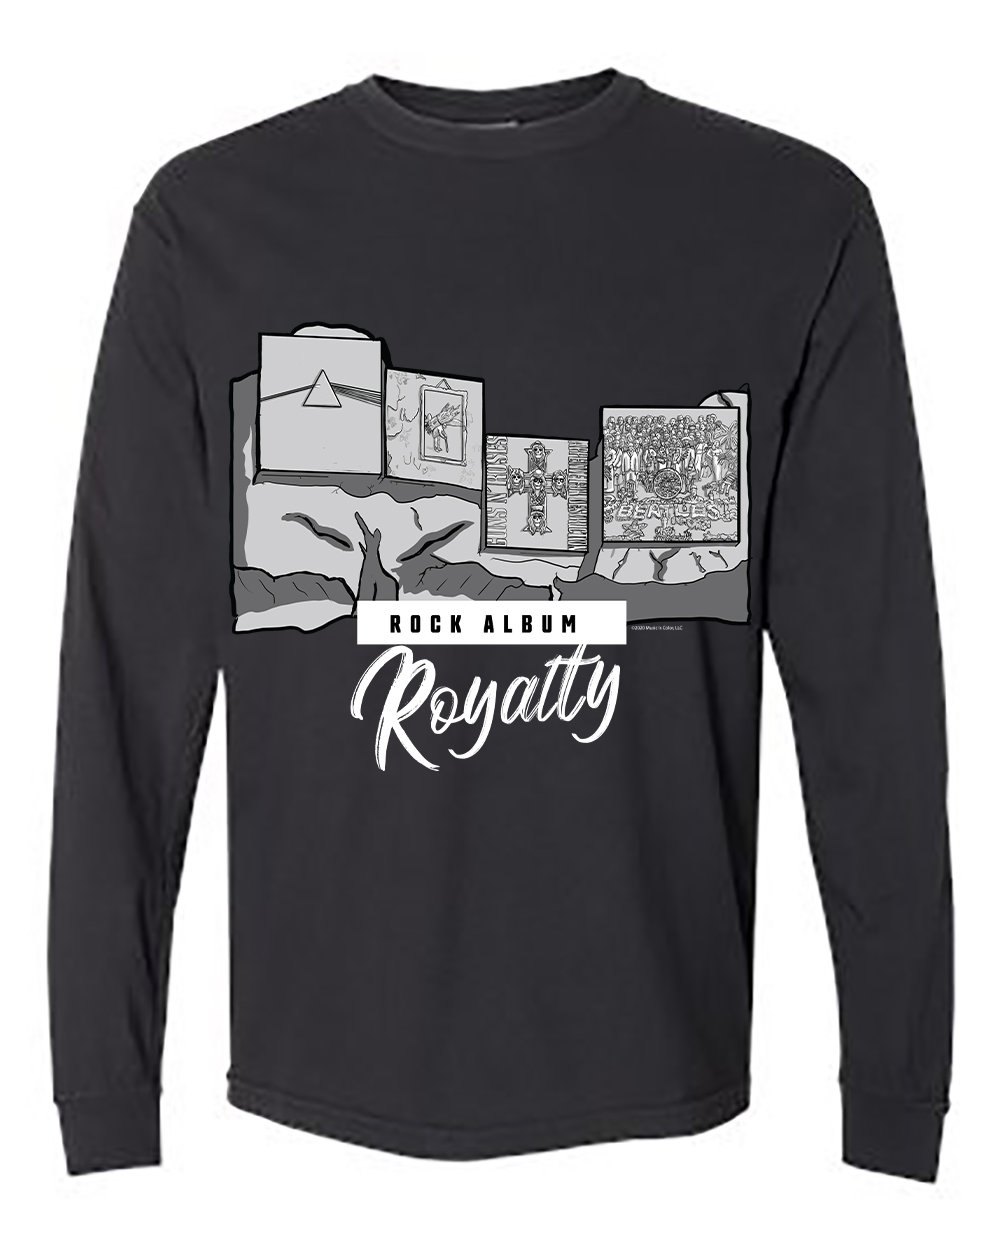 Mount Rushmore - Rock Album Royalty (Black Long Sleeve Shirt)